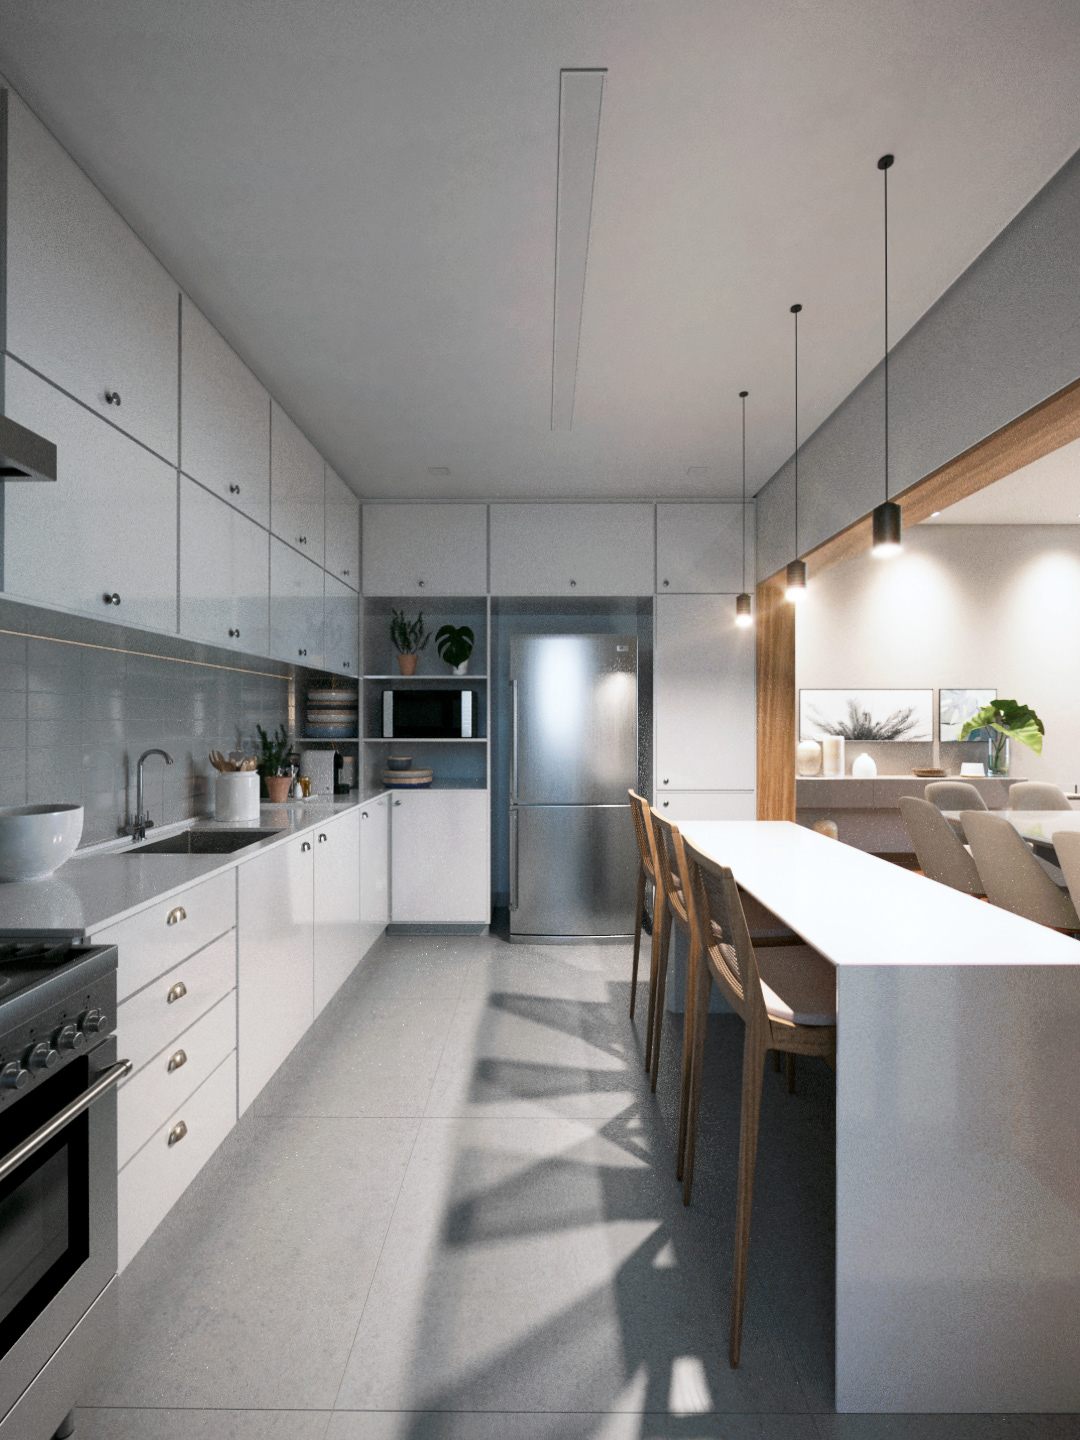 design de interiores imagem 3d designer fotorealista photorealism living room kitchen dinner room